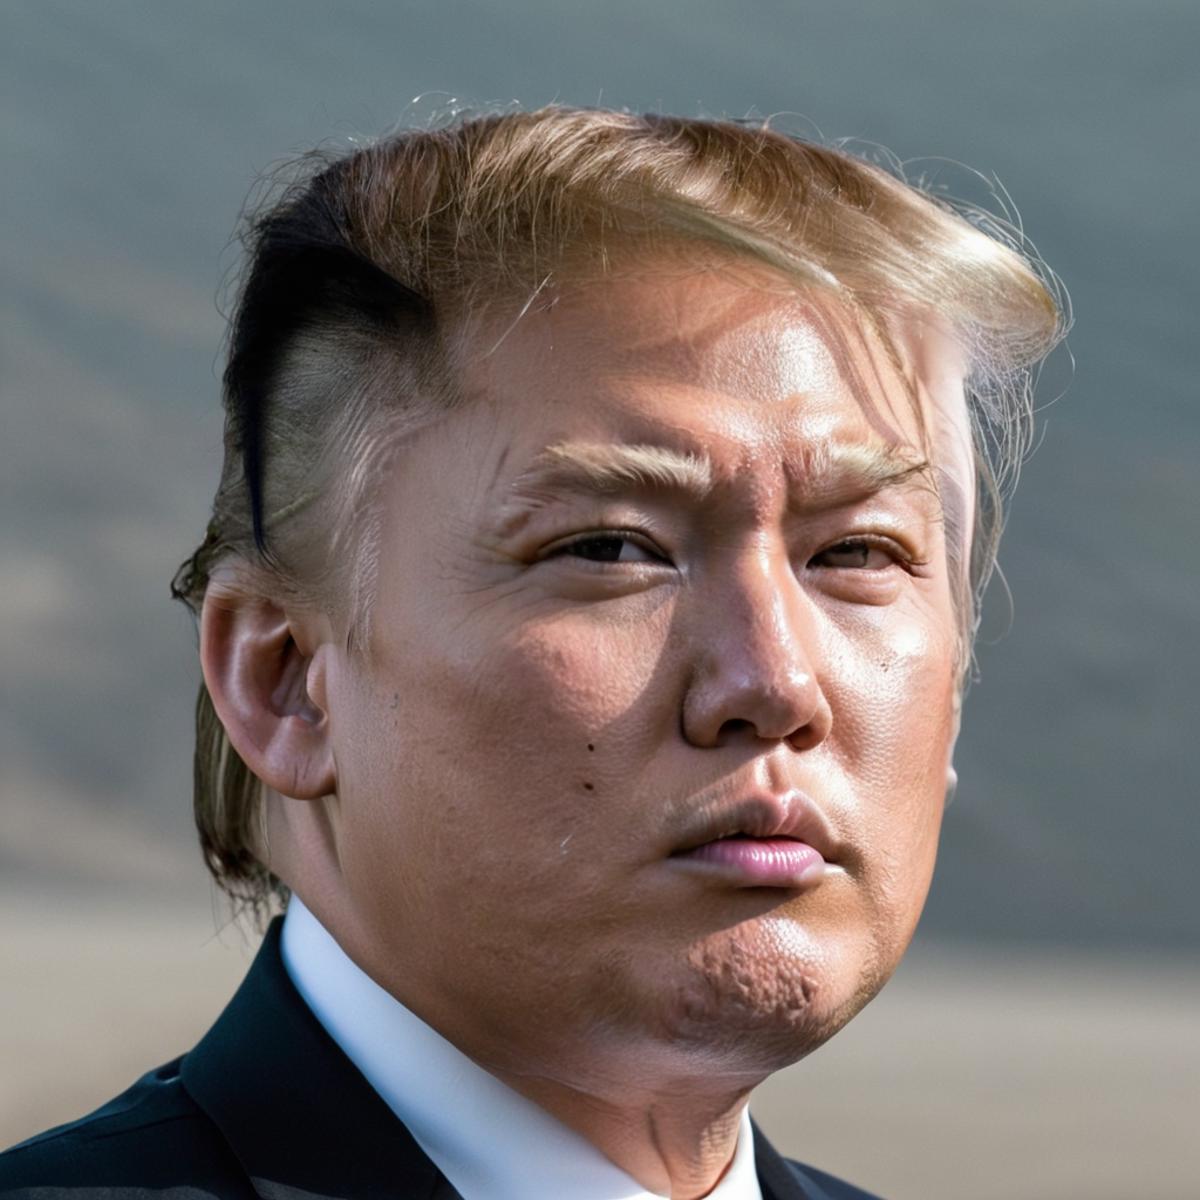 A portrait of Donald Trump.